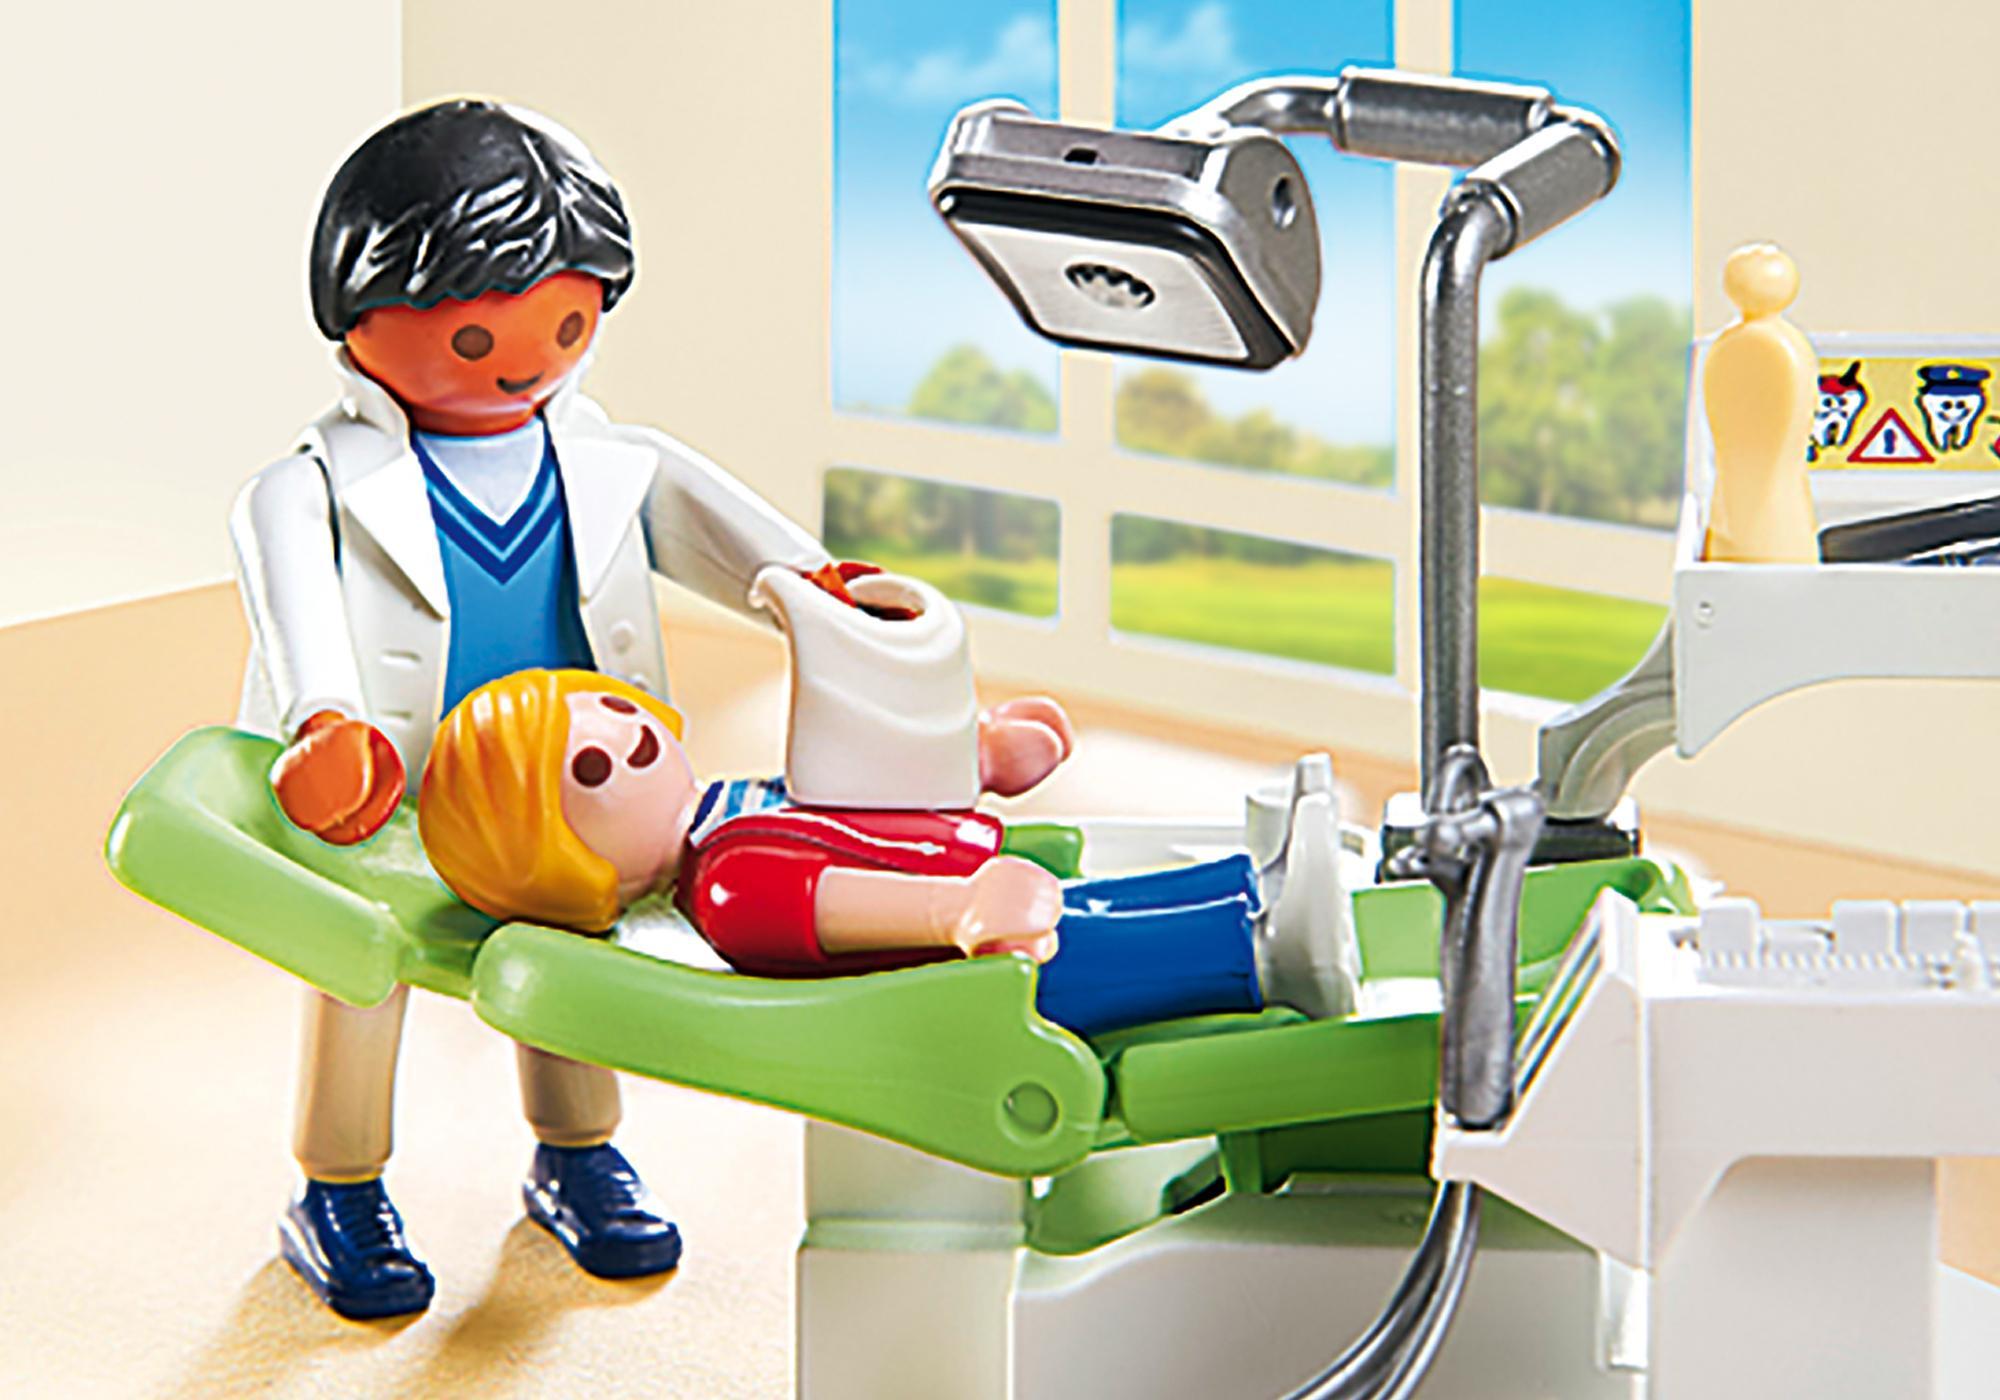 dentiste playmobil